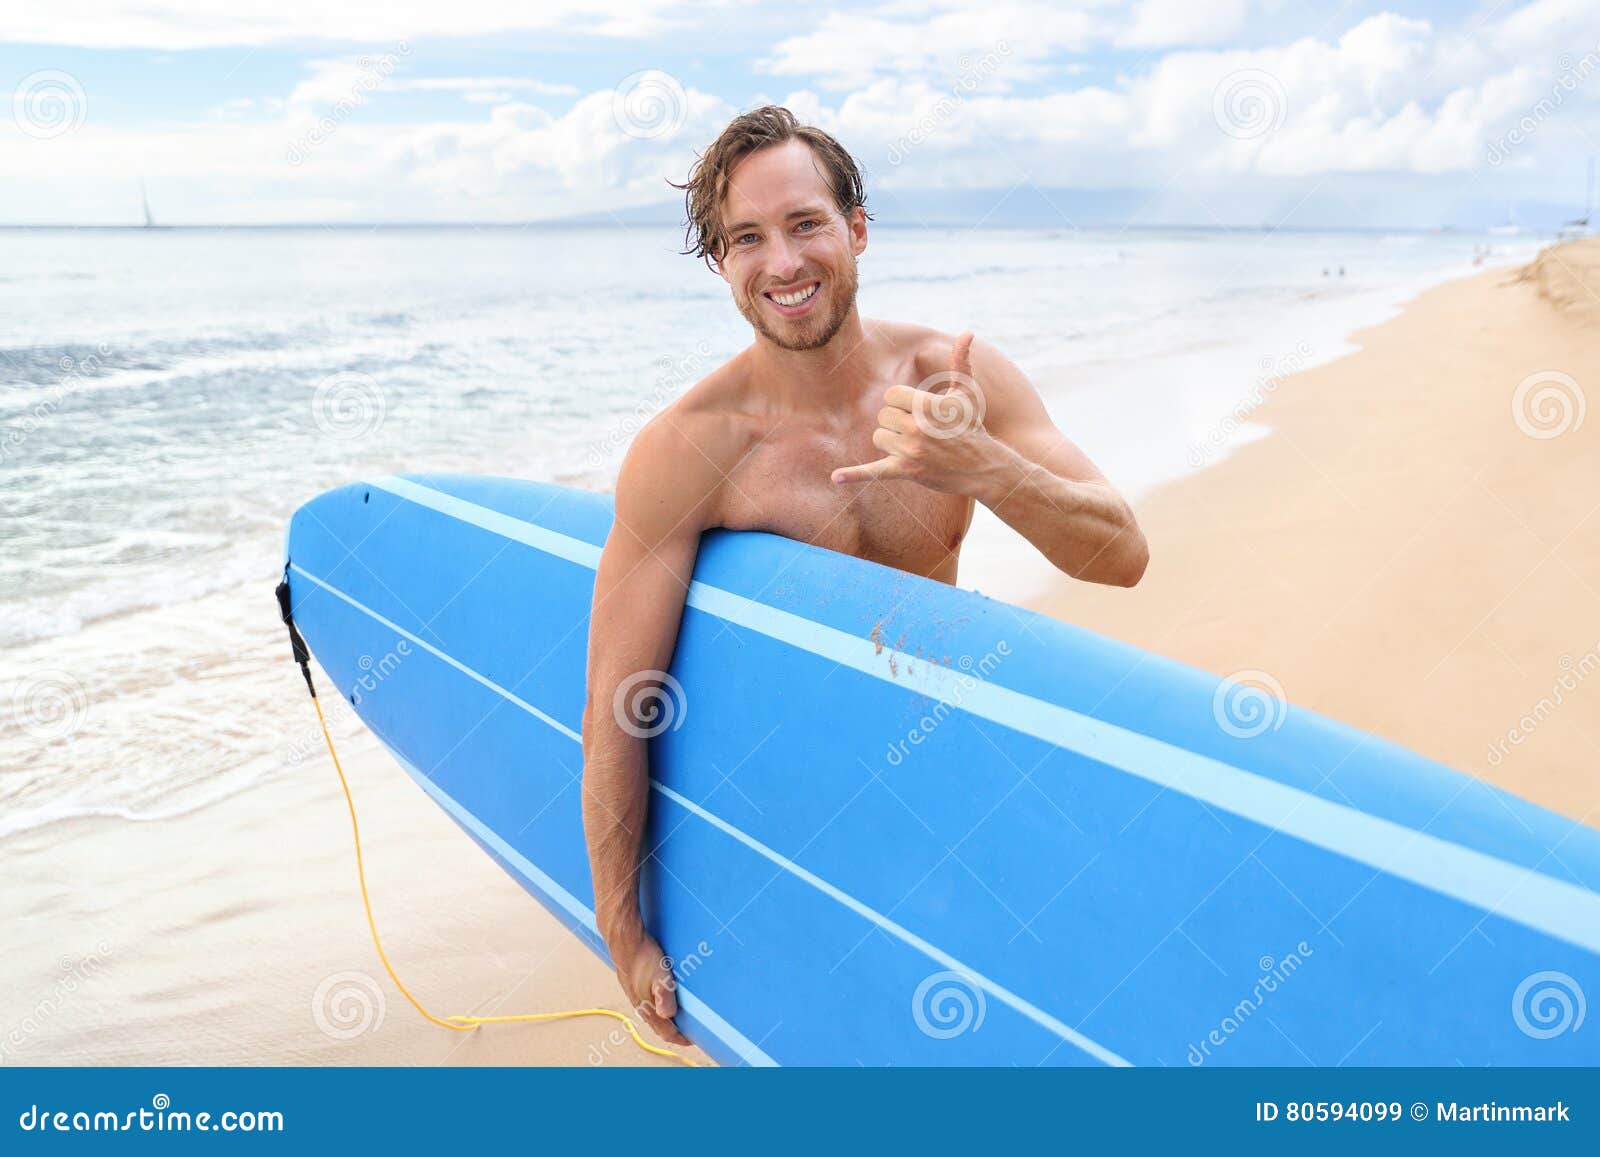 Surfing Surfer Summer Beach Cool Gift #8365 Shaka Surf Hand Keyring IP02